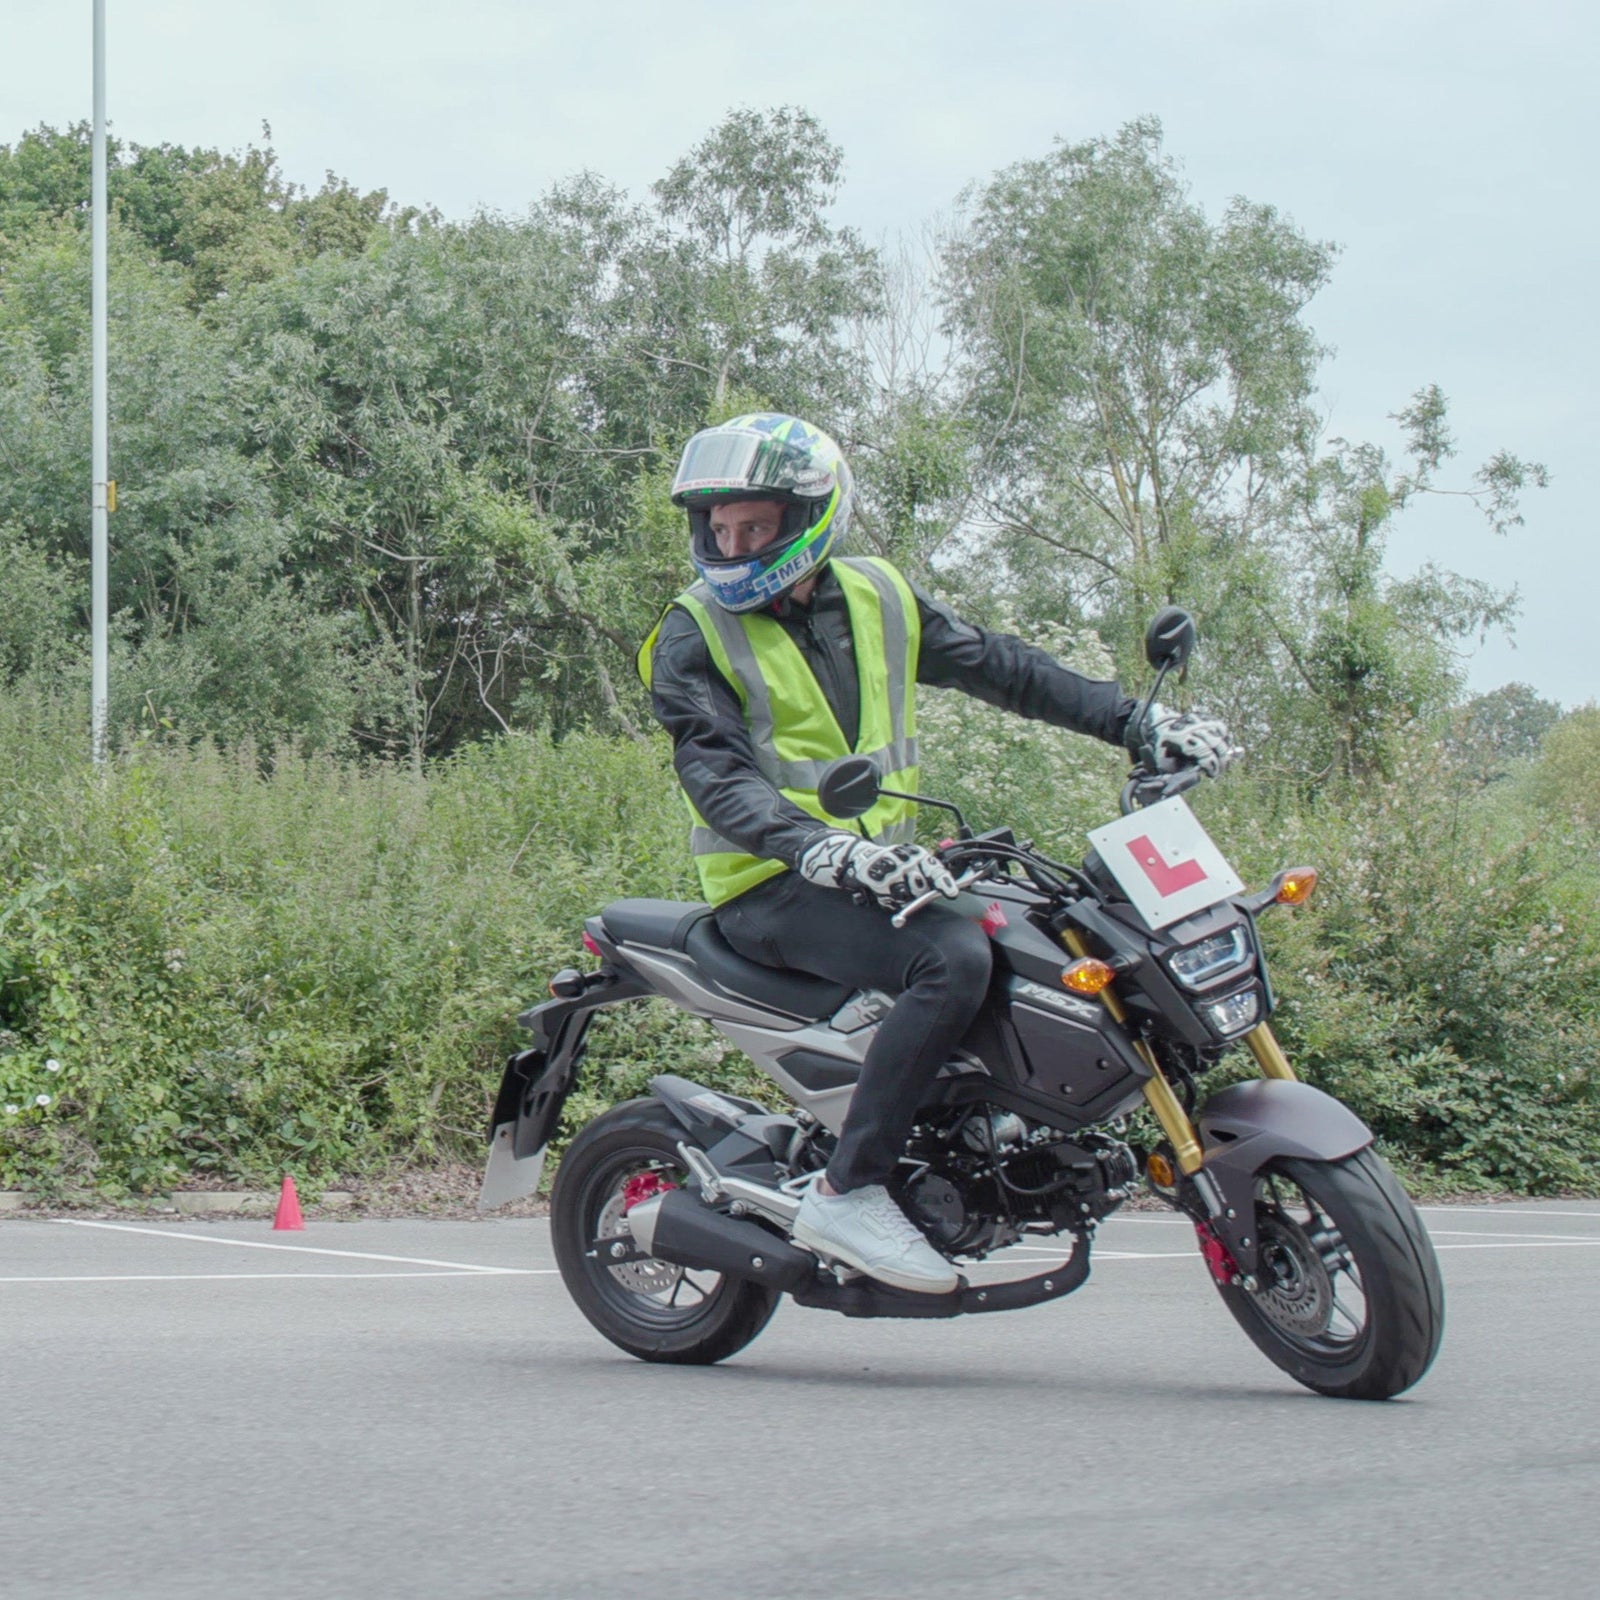 Honda of Bournemouth Motorcycle Training Courses